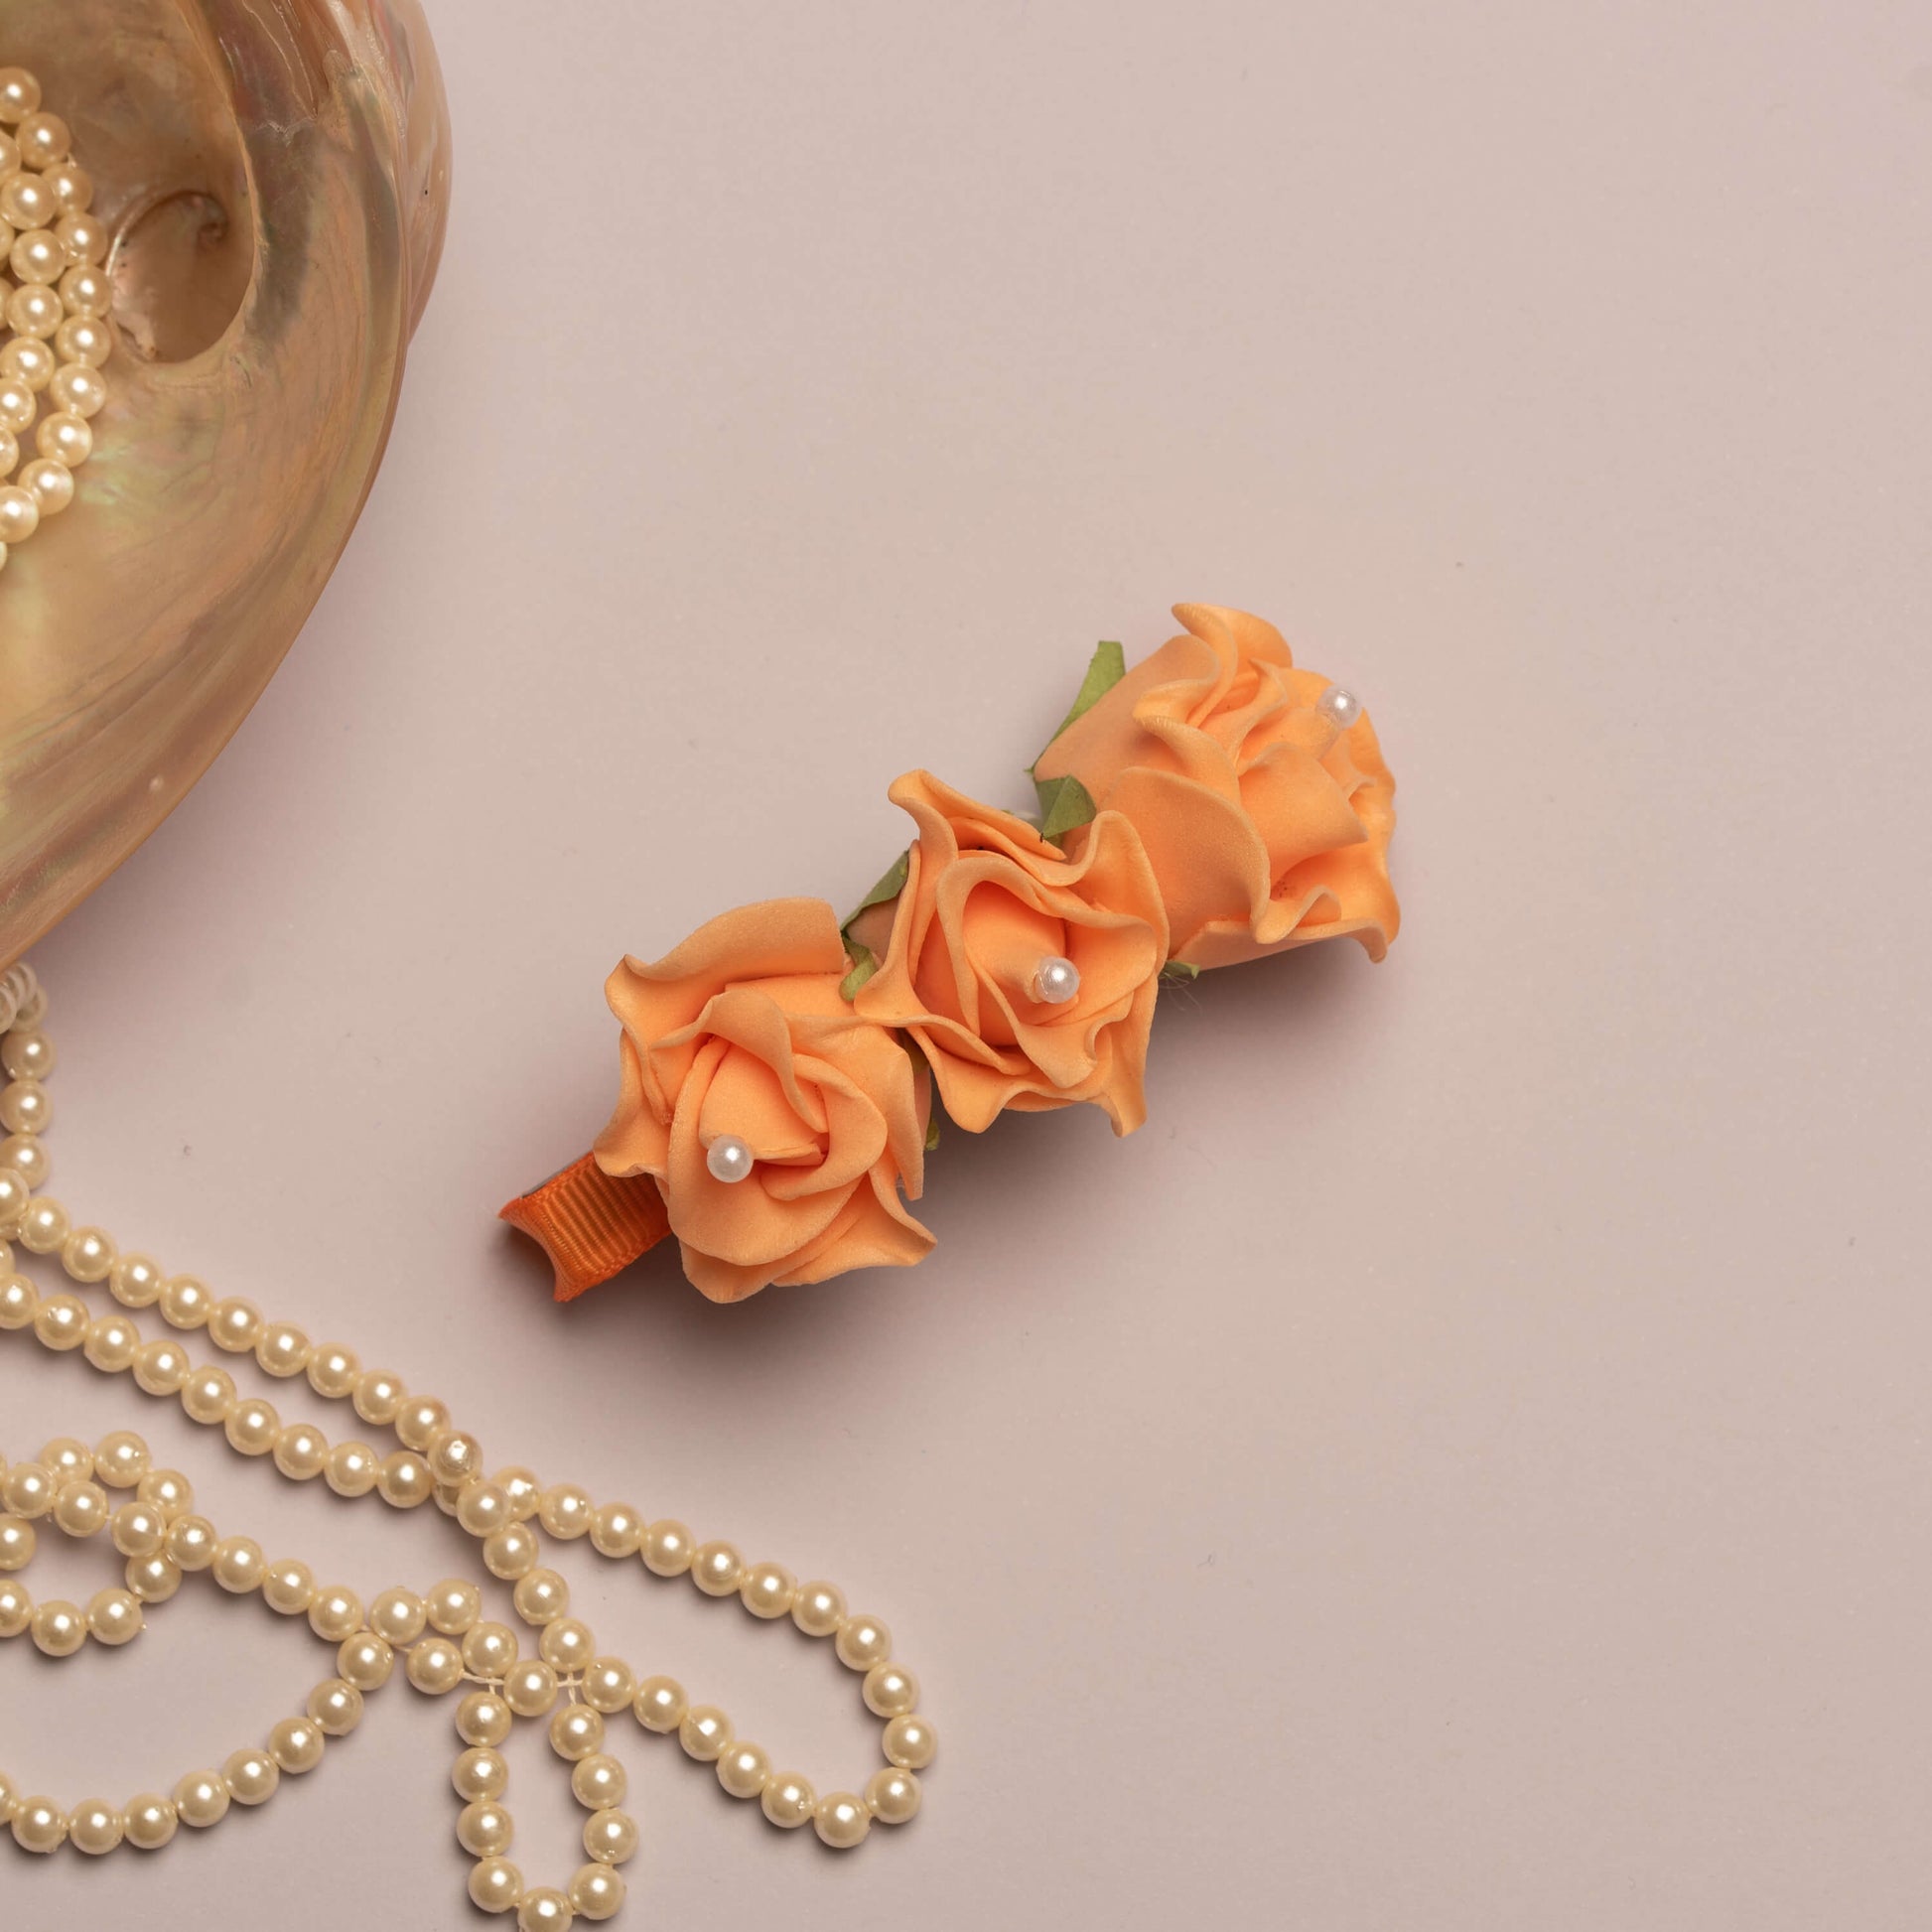 Ribbon Candy - Pearl Embellished Flowers on Alligator Hair Pin - Orange